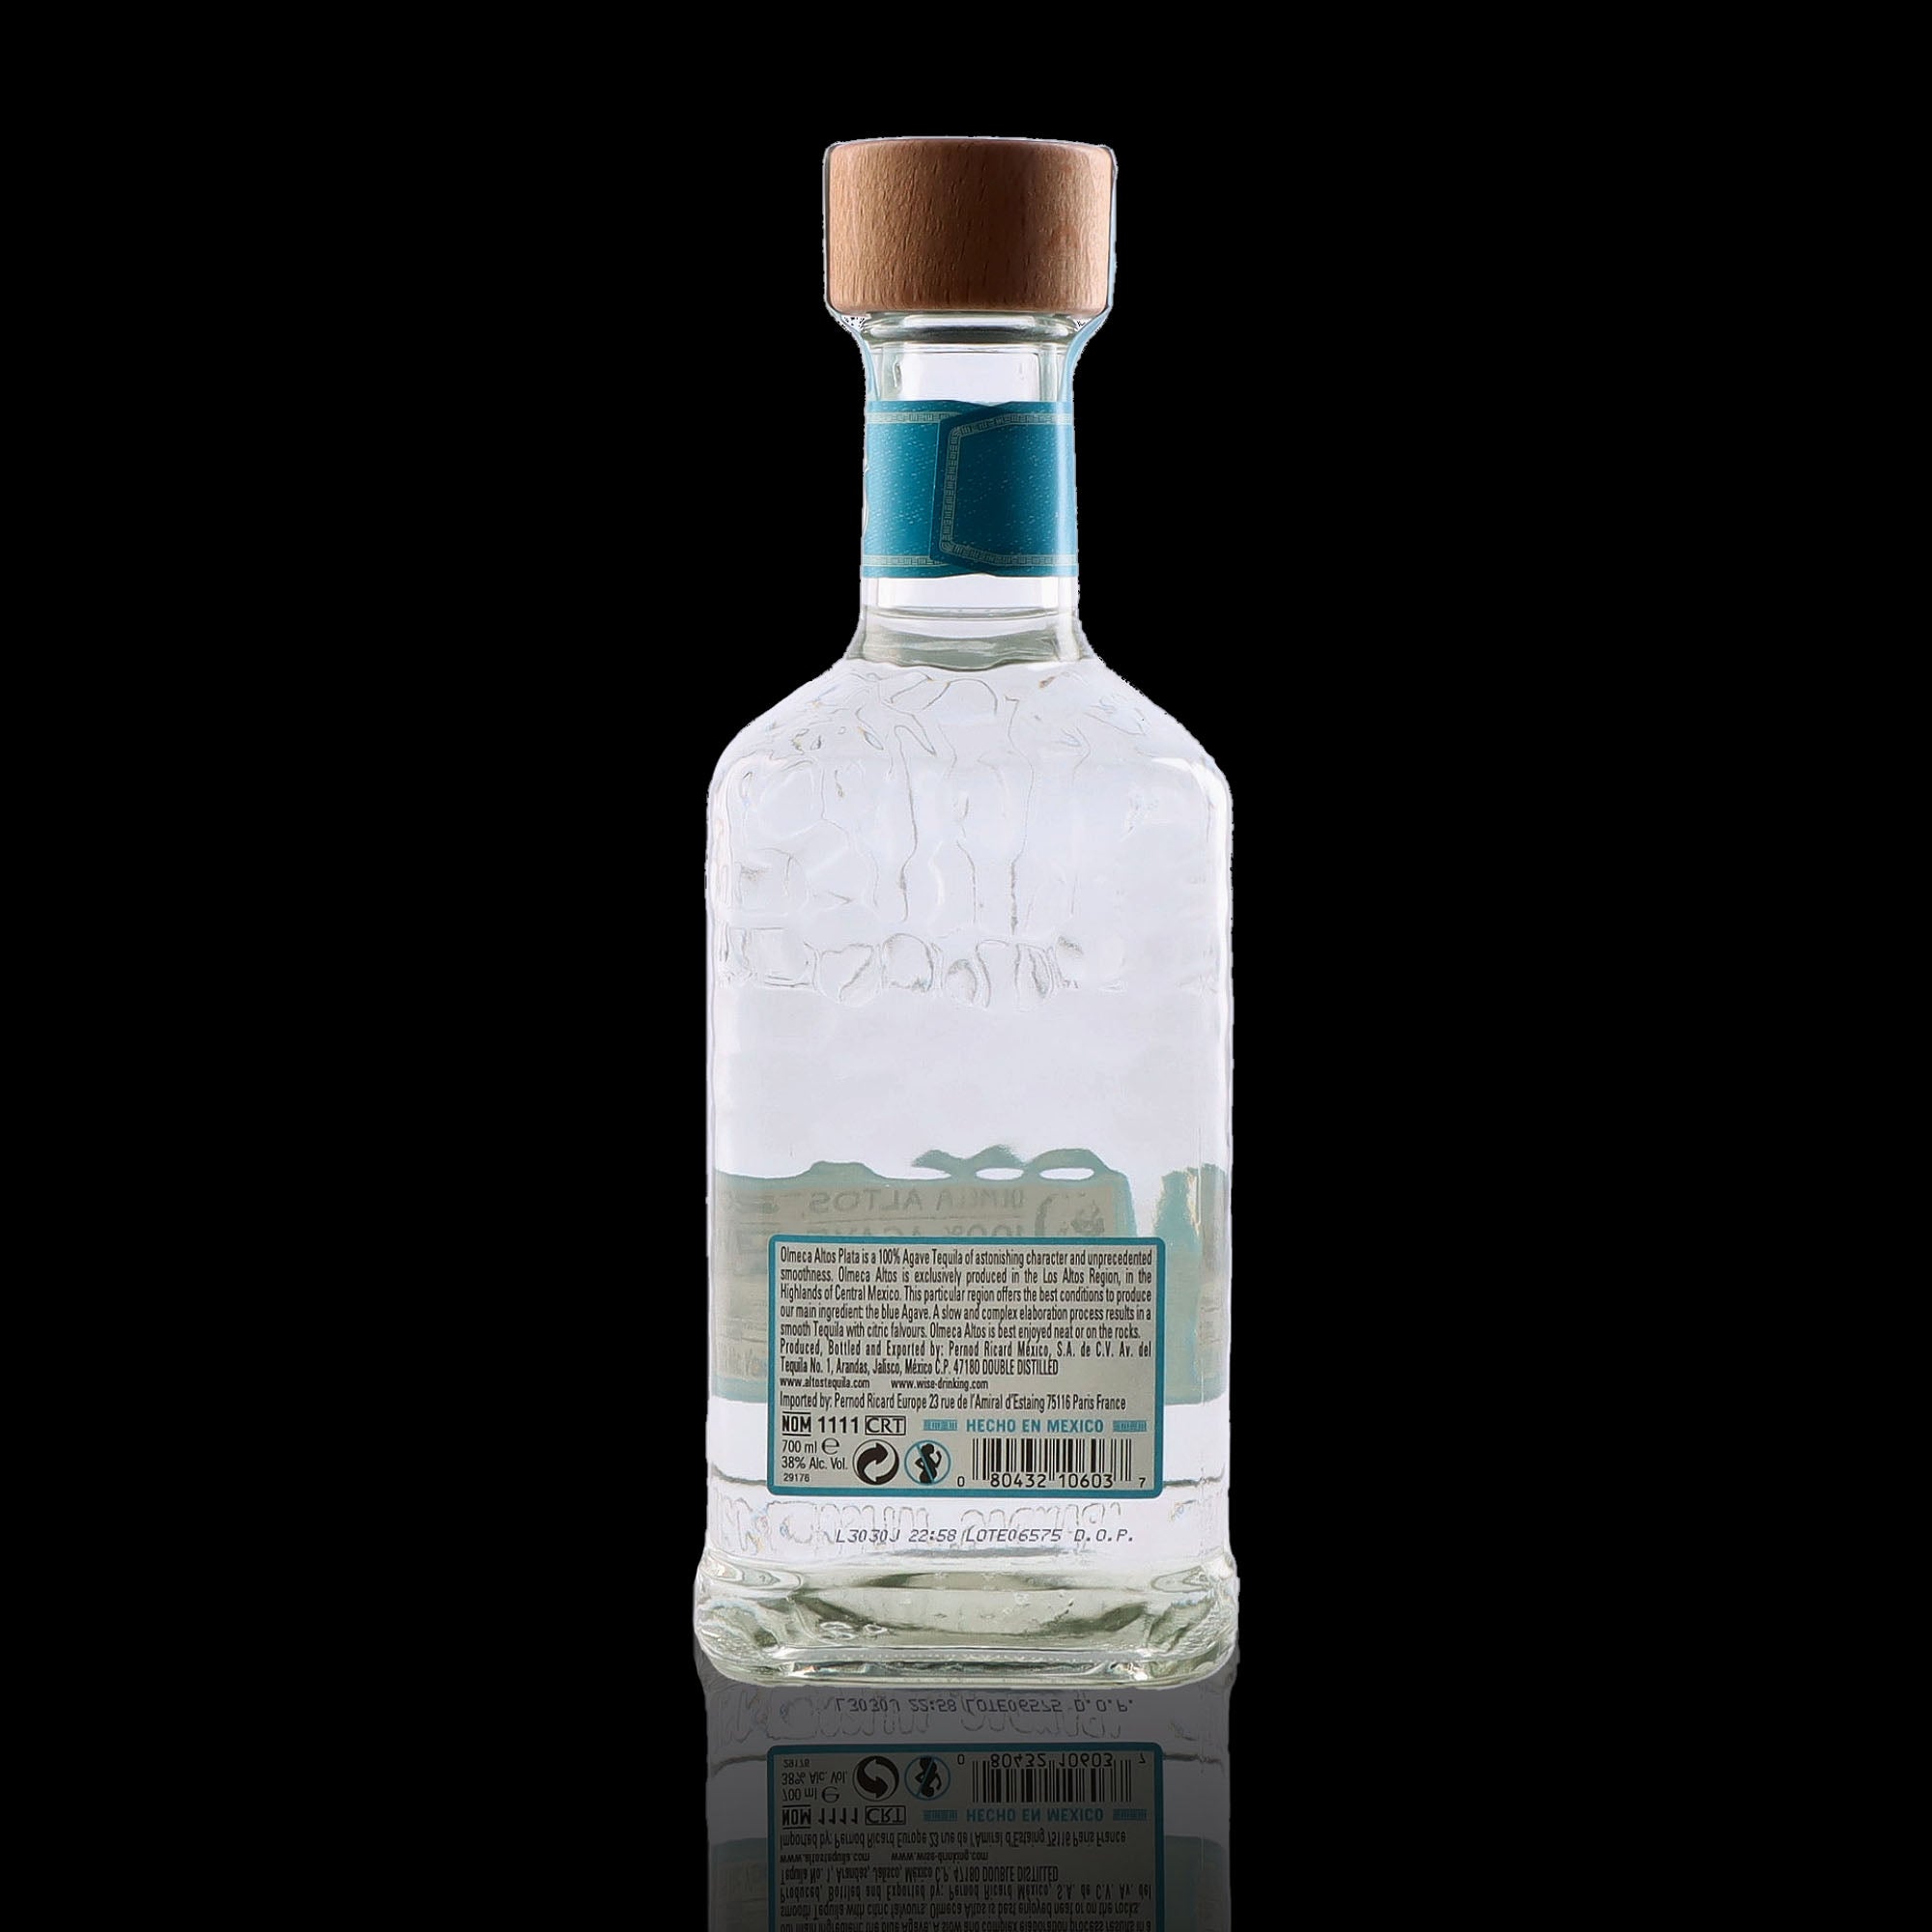 Une bouteille de Tequila, de la marque Olmeca Altos, nommée Blanco.